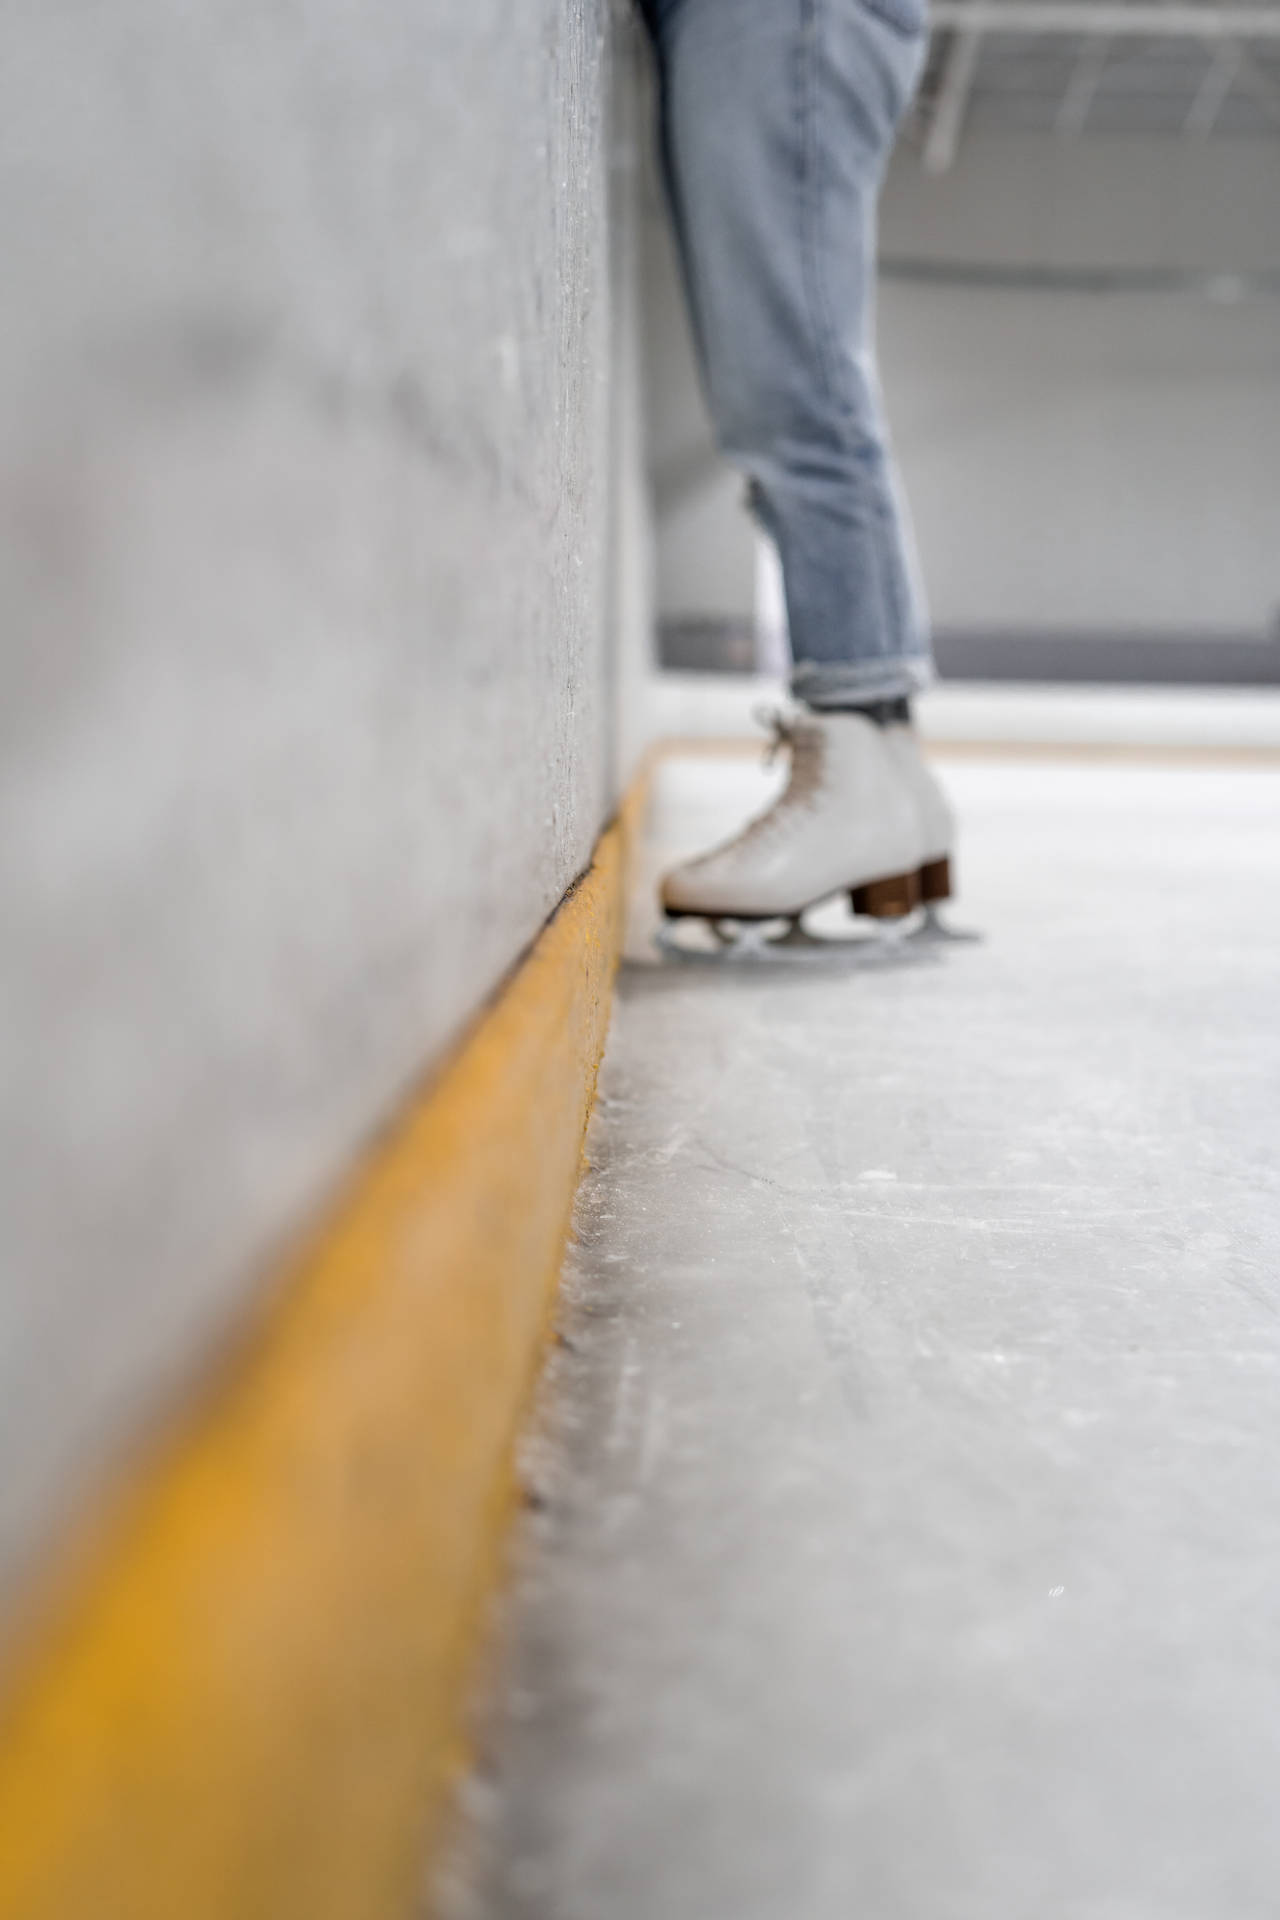 A Pair Of Icy Magic - Ice Skating Shoes Wallpaper